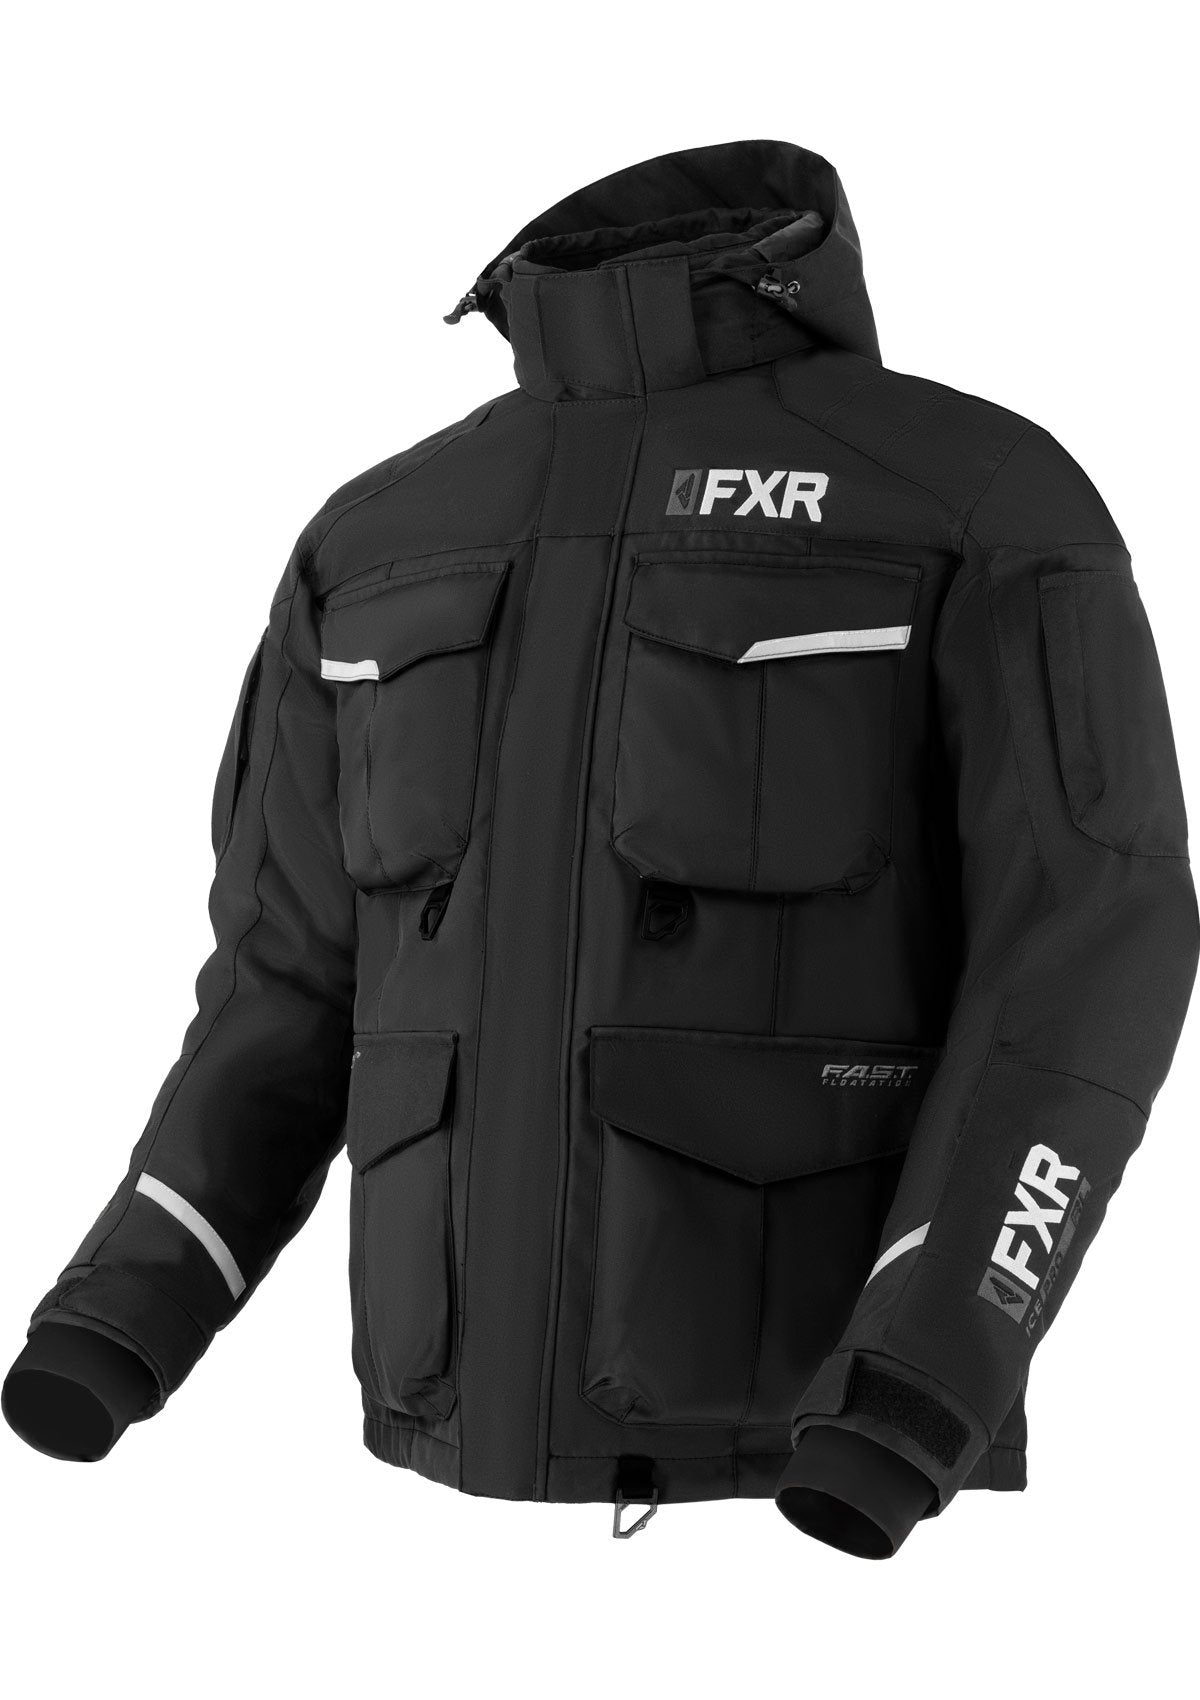 fxr excursion jacket